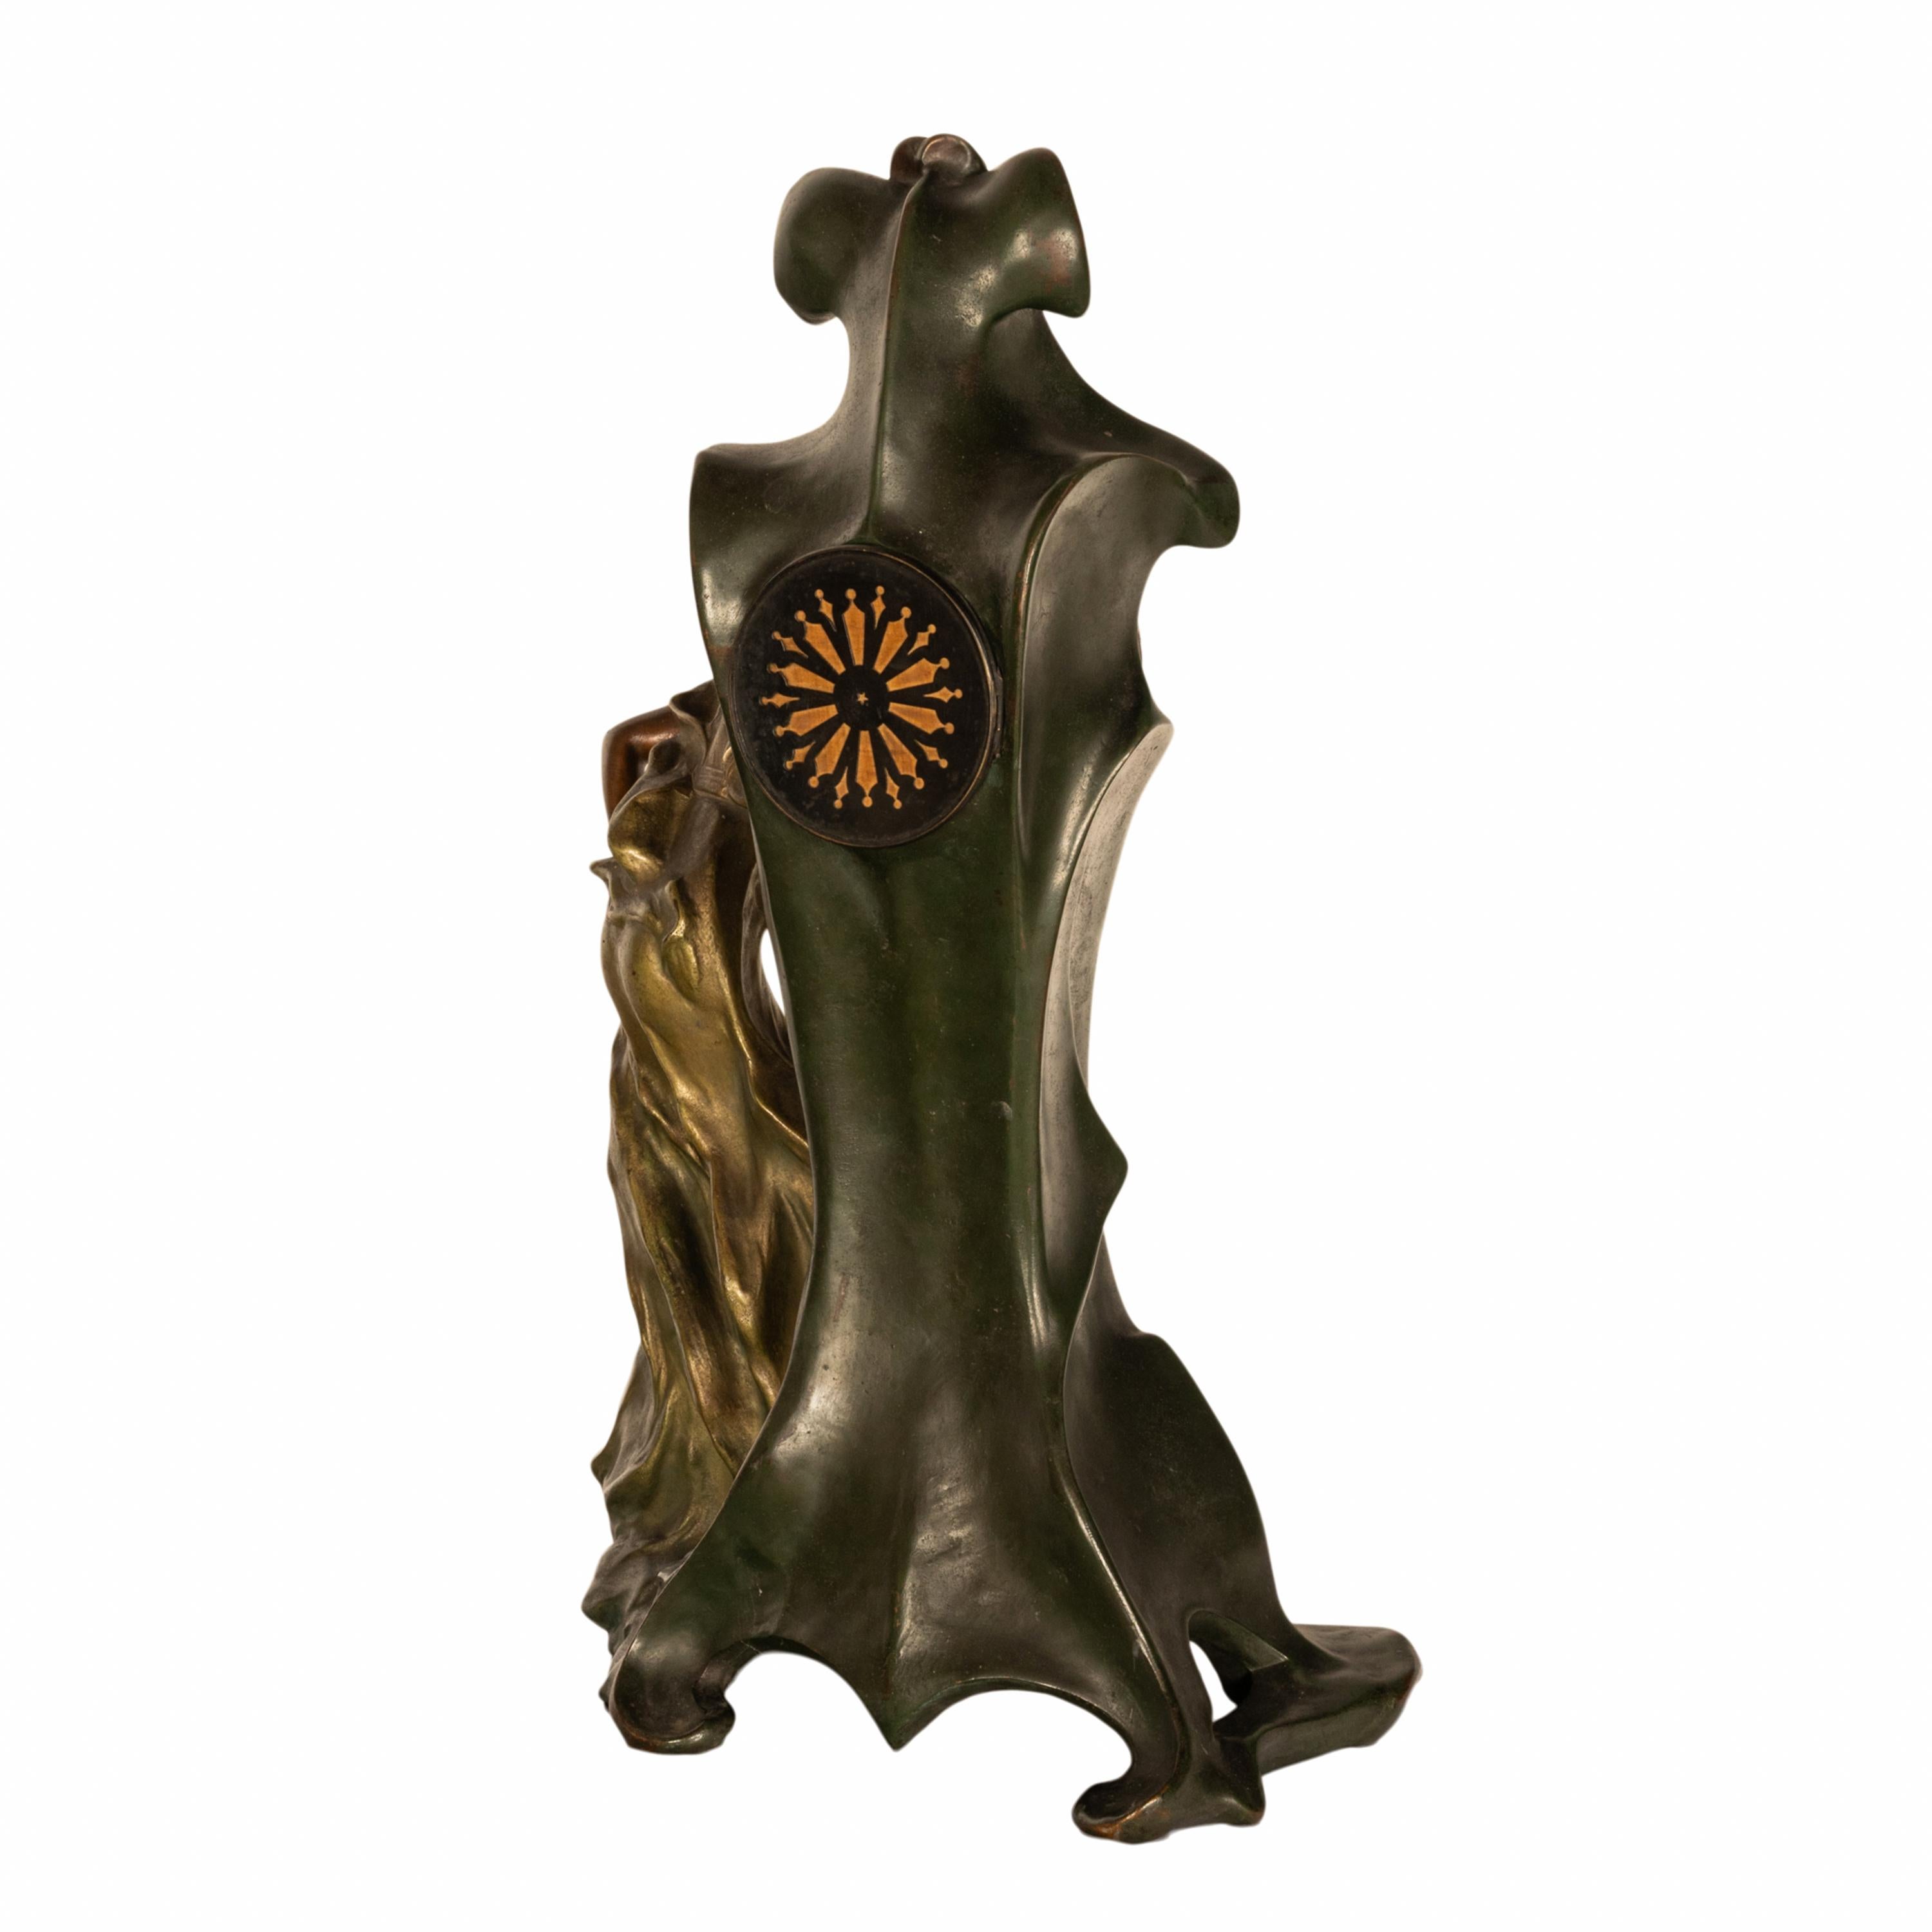 Antique French Art Nouveau Cold-Painted Bronze Figural Statue 8 Day Clock 1900 For Sale 1